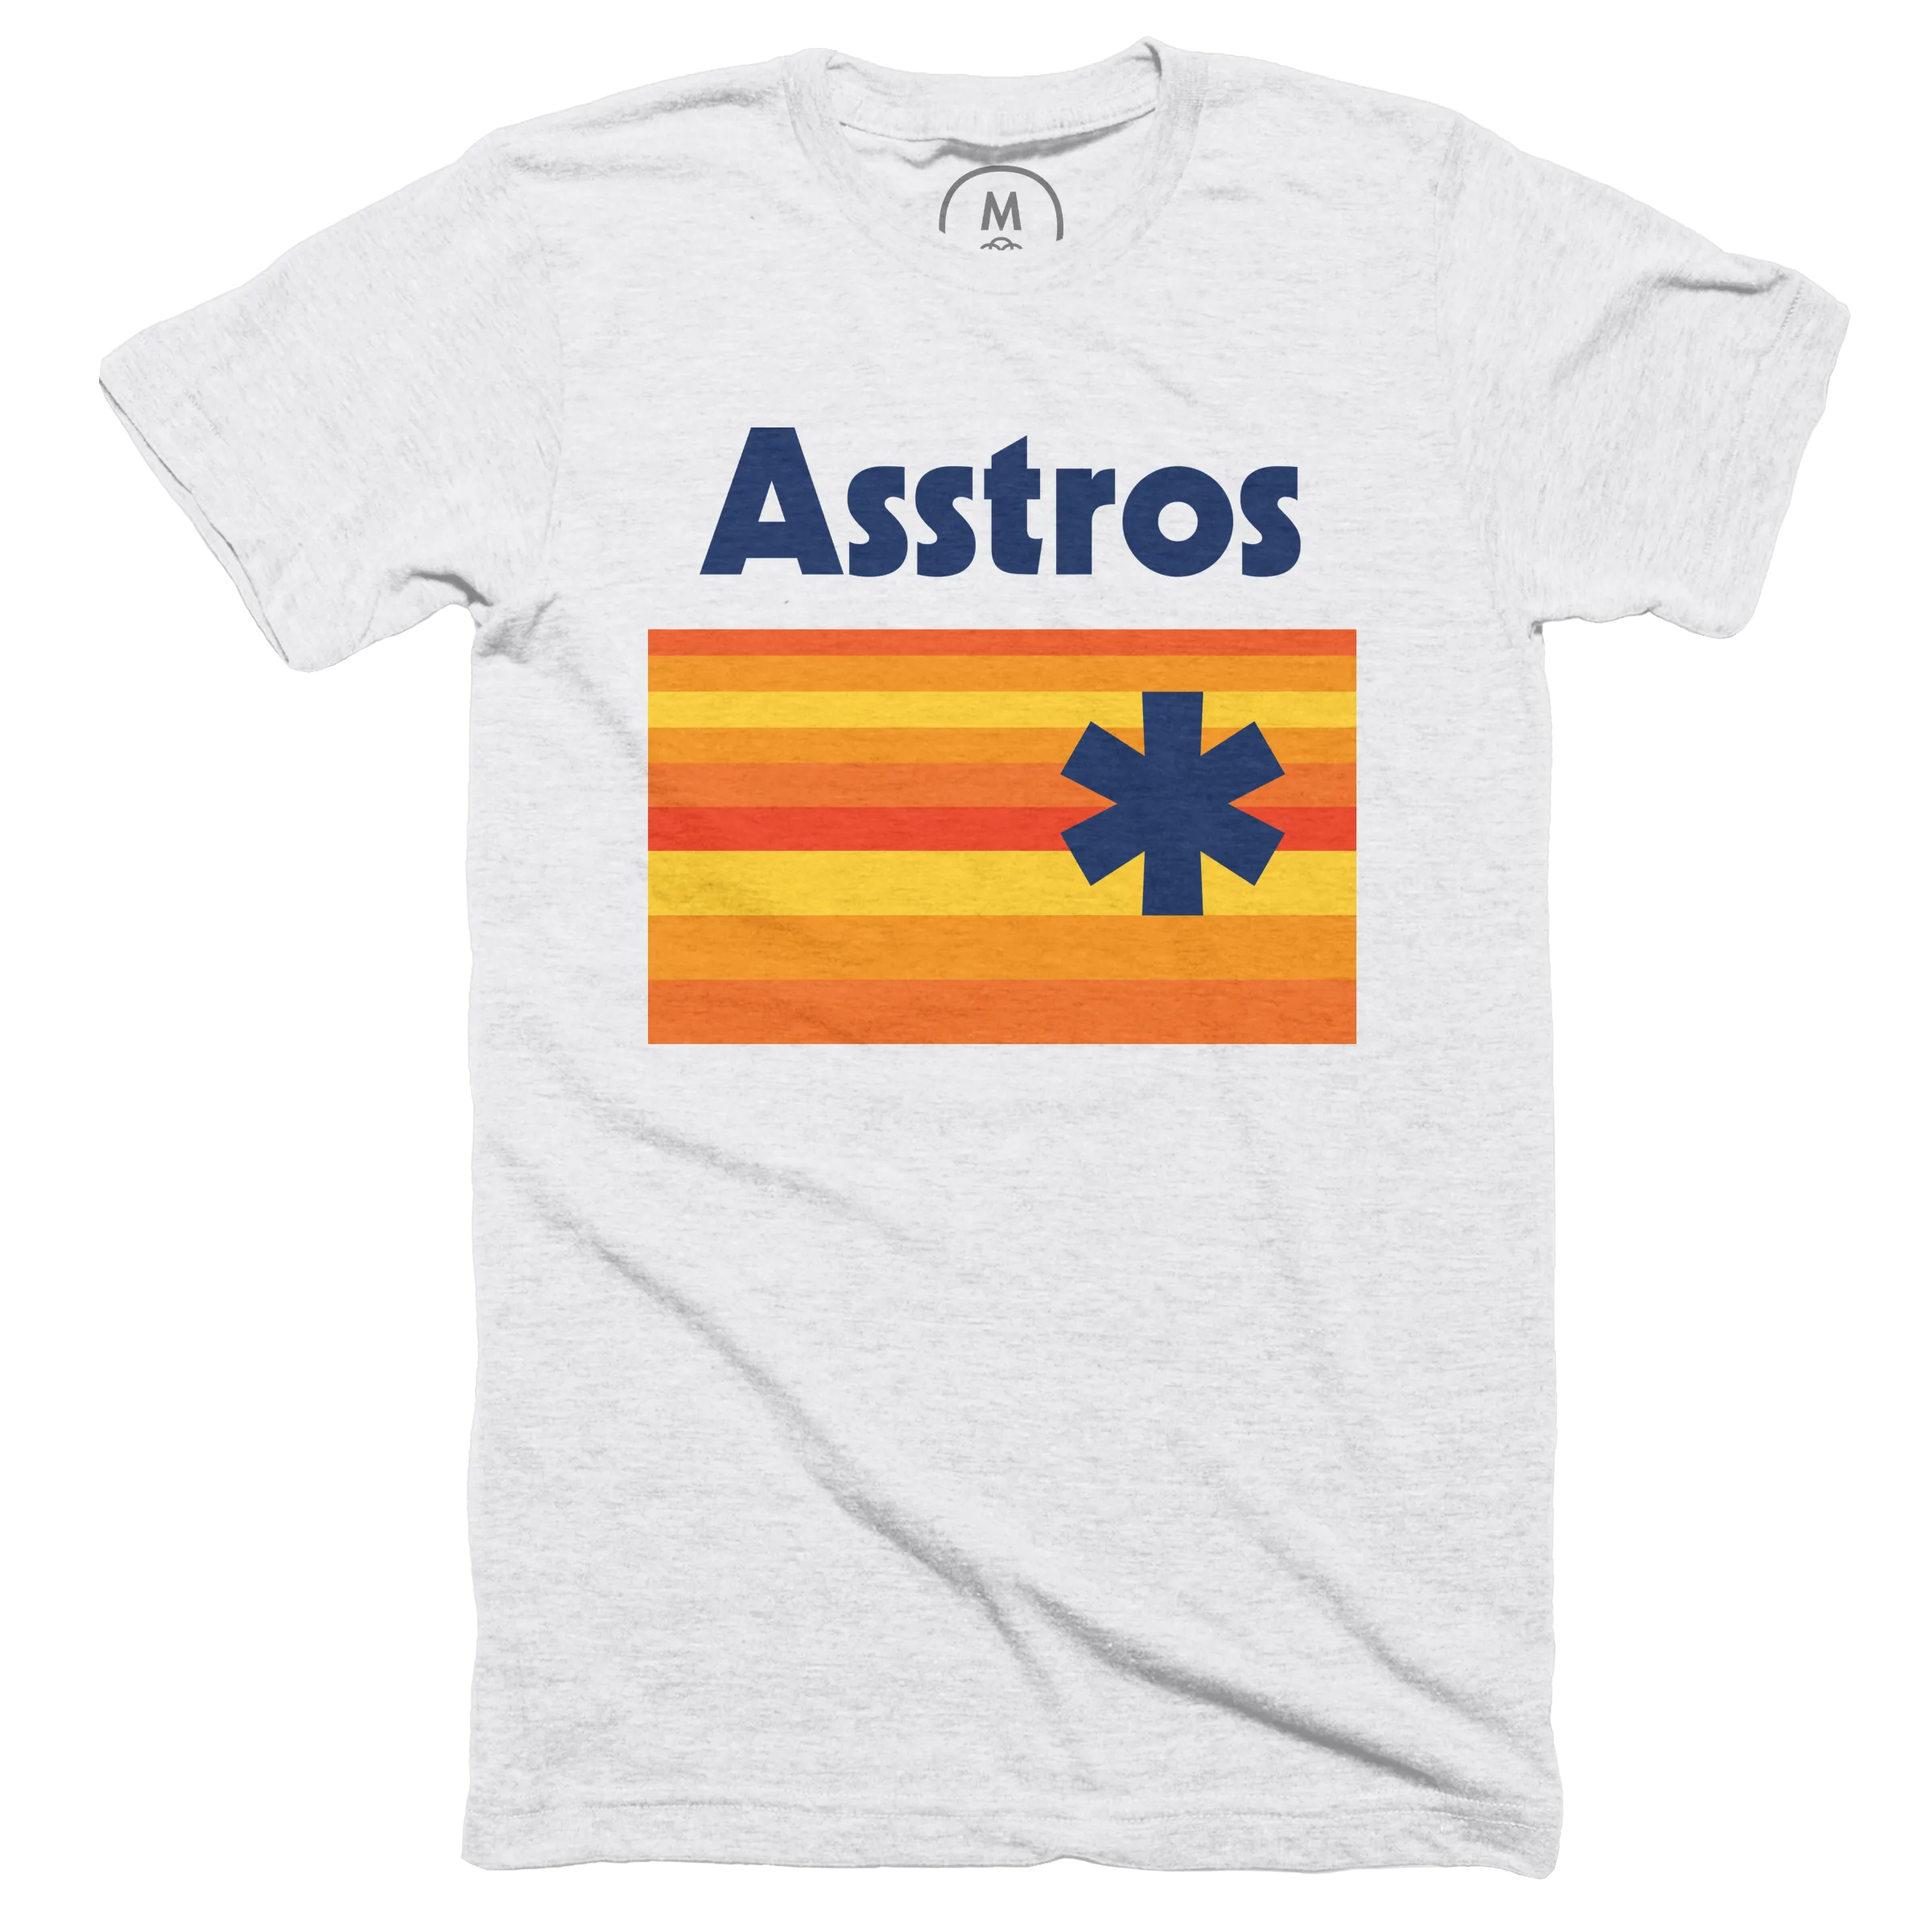 Houston Astros Men's Championship Shirt 2017 World Series 47 Brand XL  Excellent